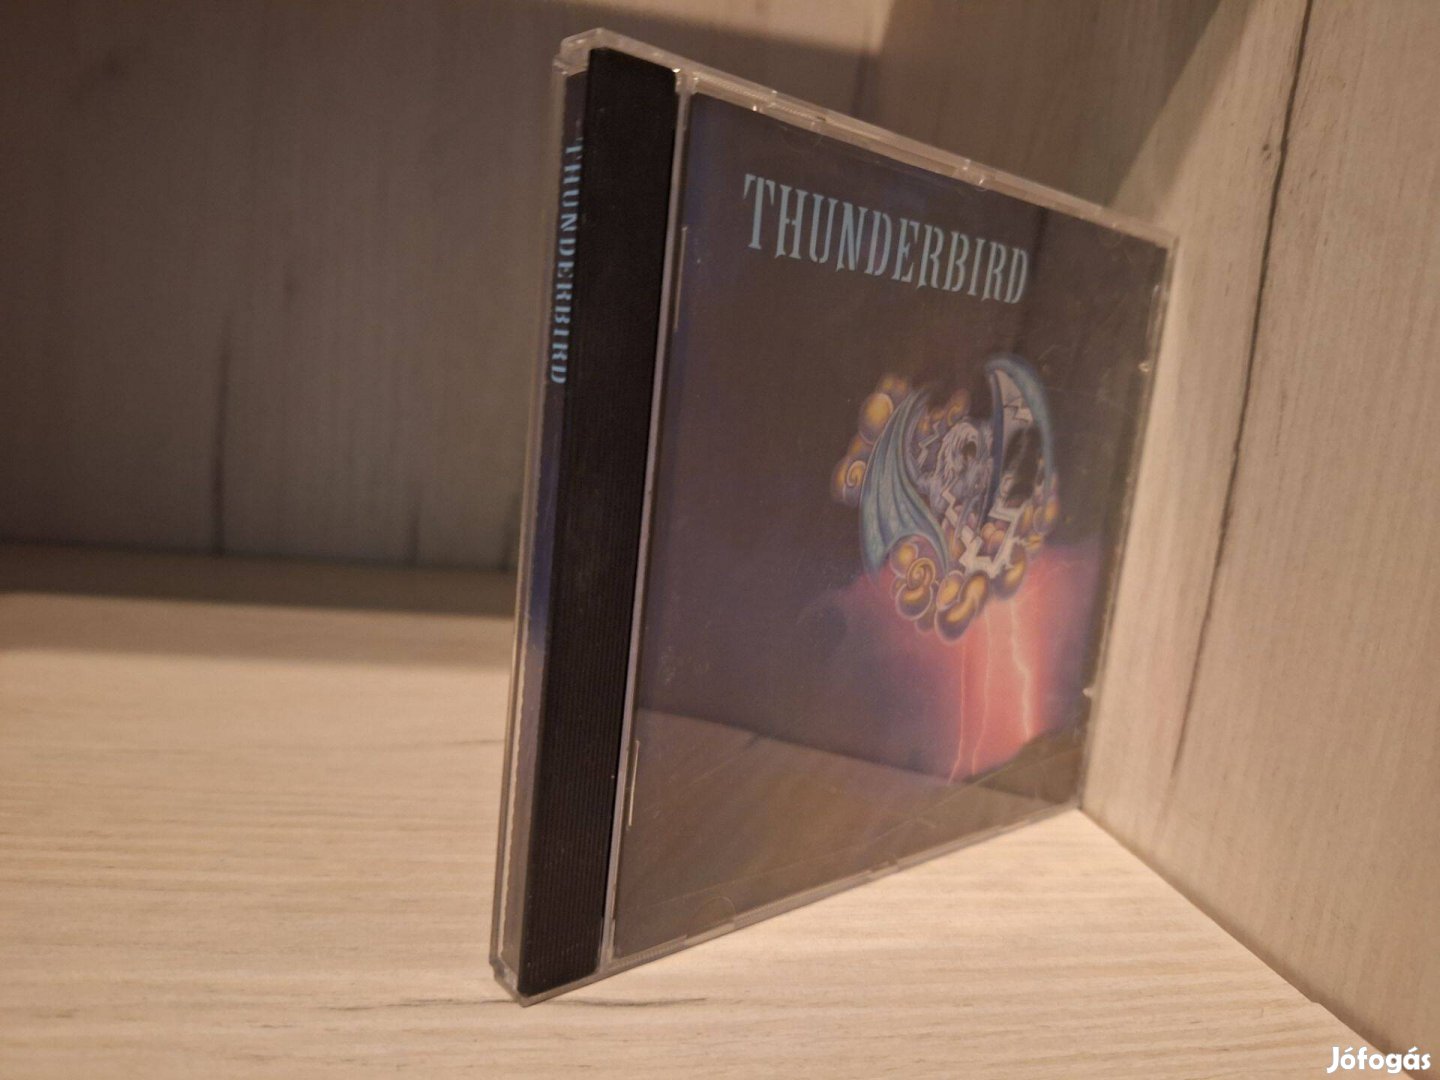 Thunderbird - Thunderbird CD